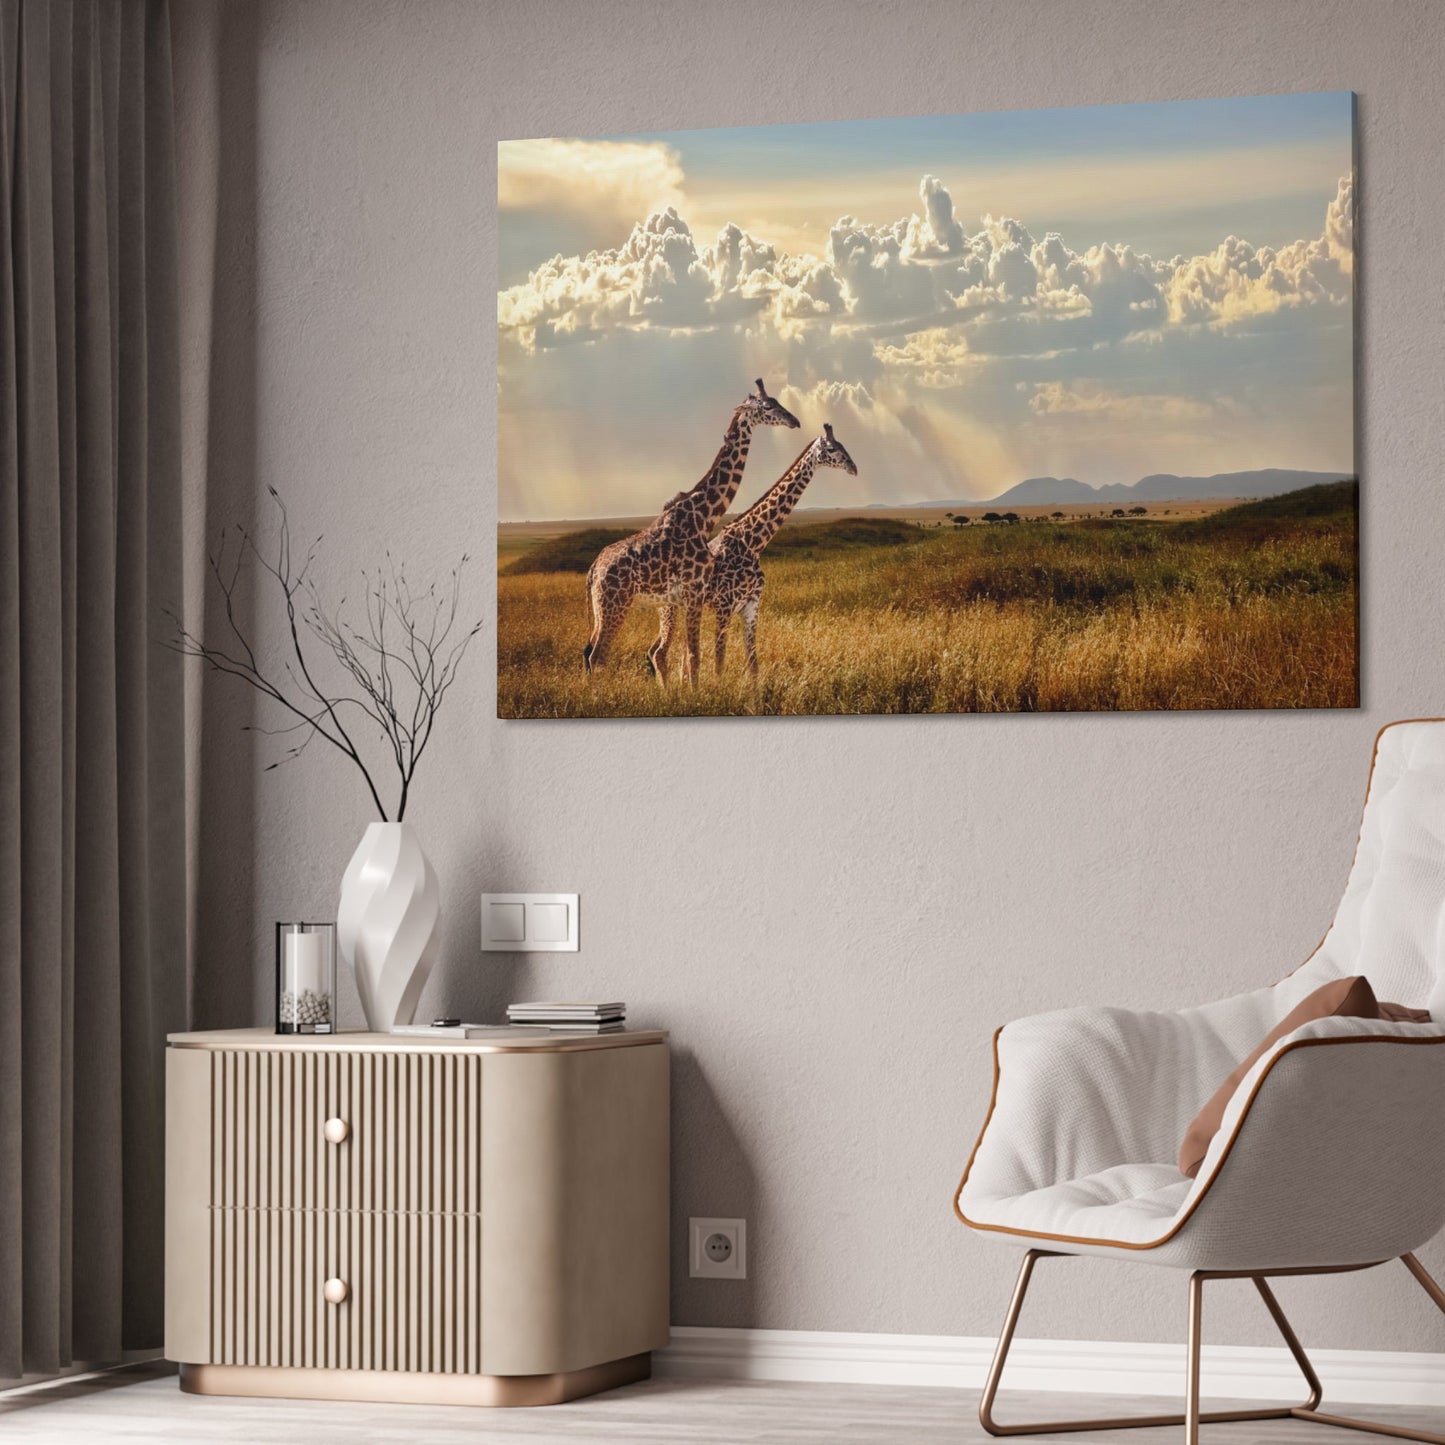 Graceful Giants: Striking Print on Canvas of Giraffes in Motion